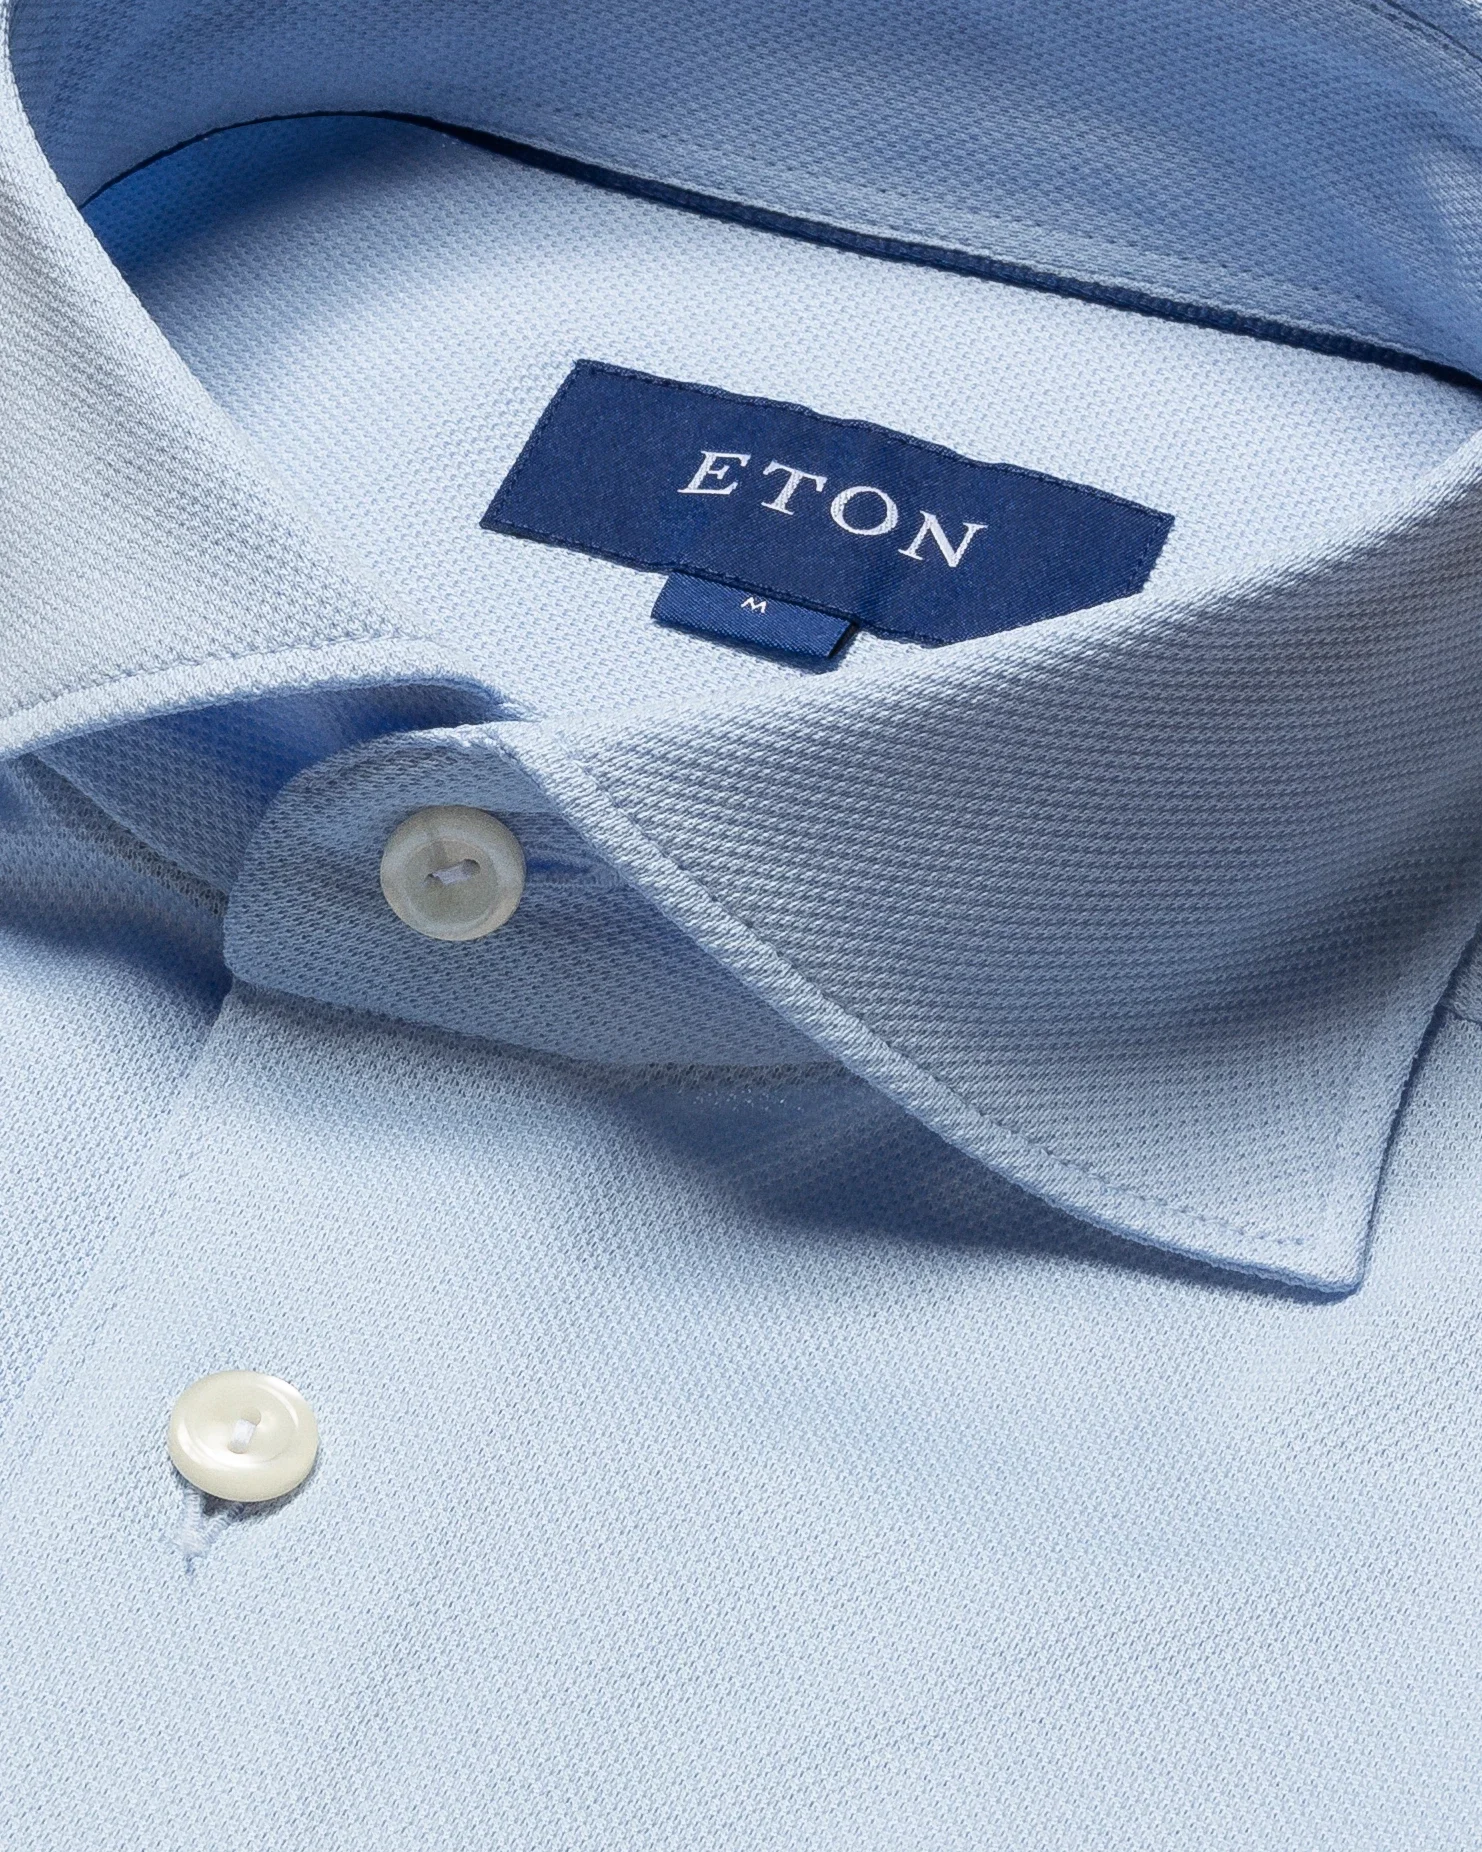 Eton - light blue pique shirt